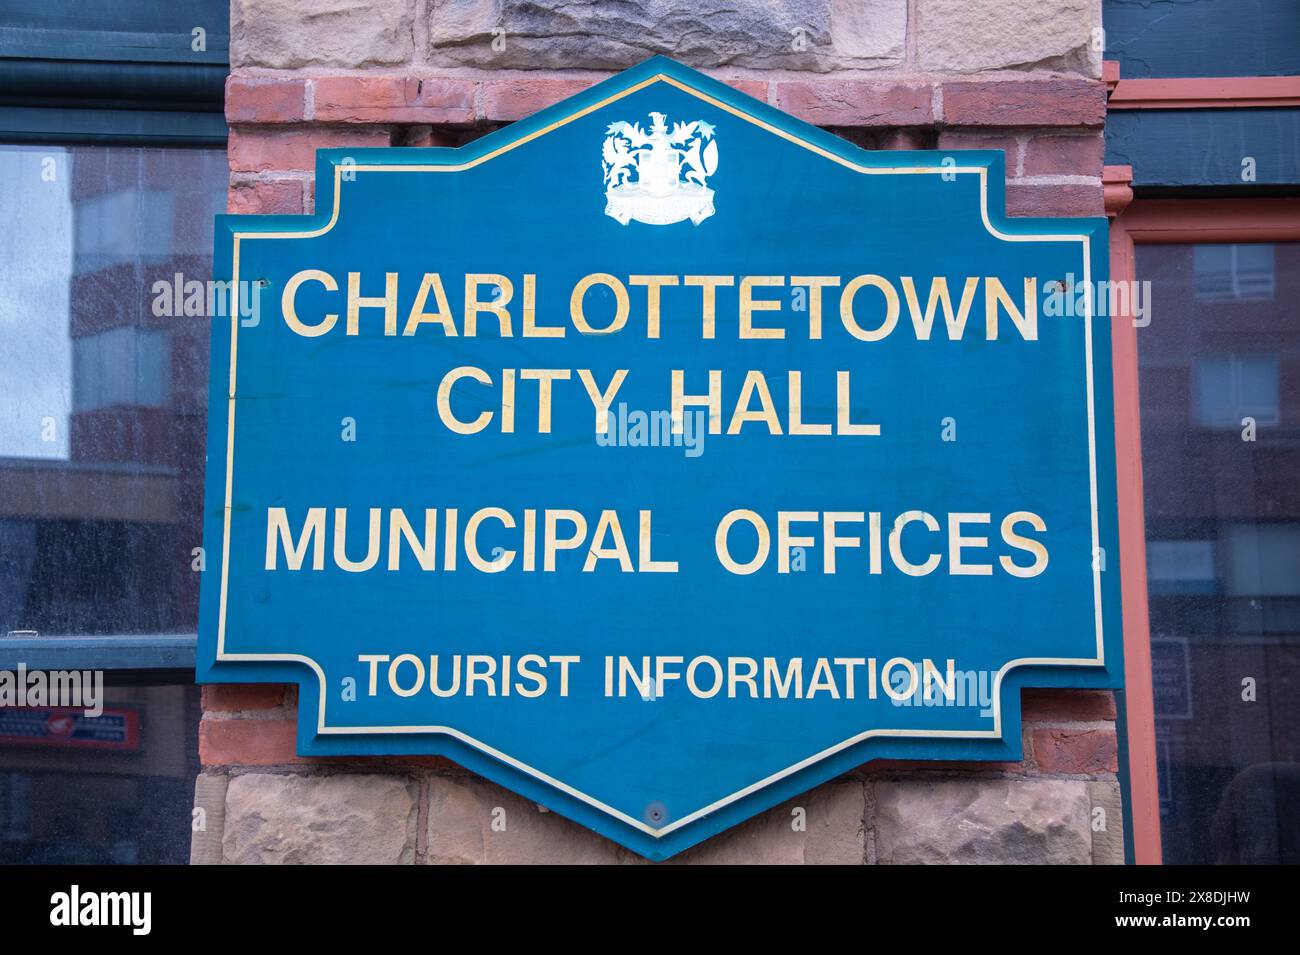 Charlottetown city hall sign in Prince Edward Island, Canada Stock Photo